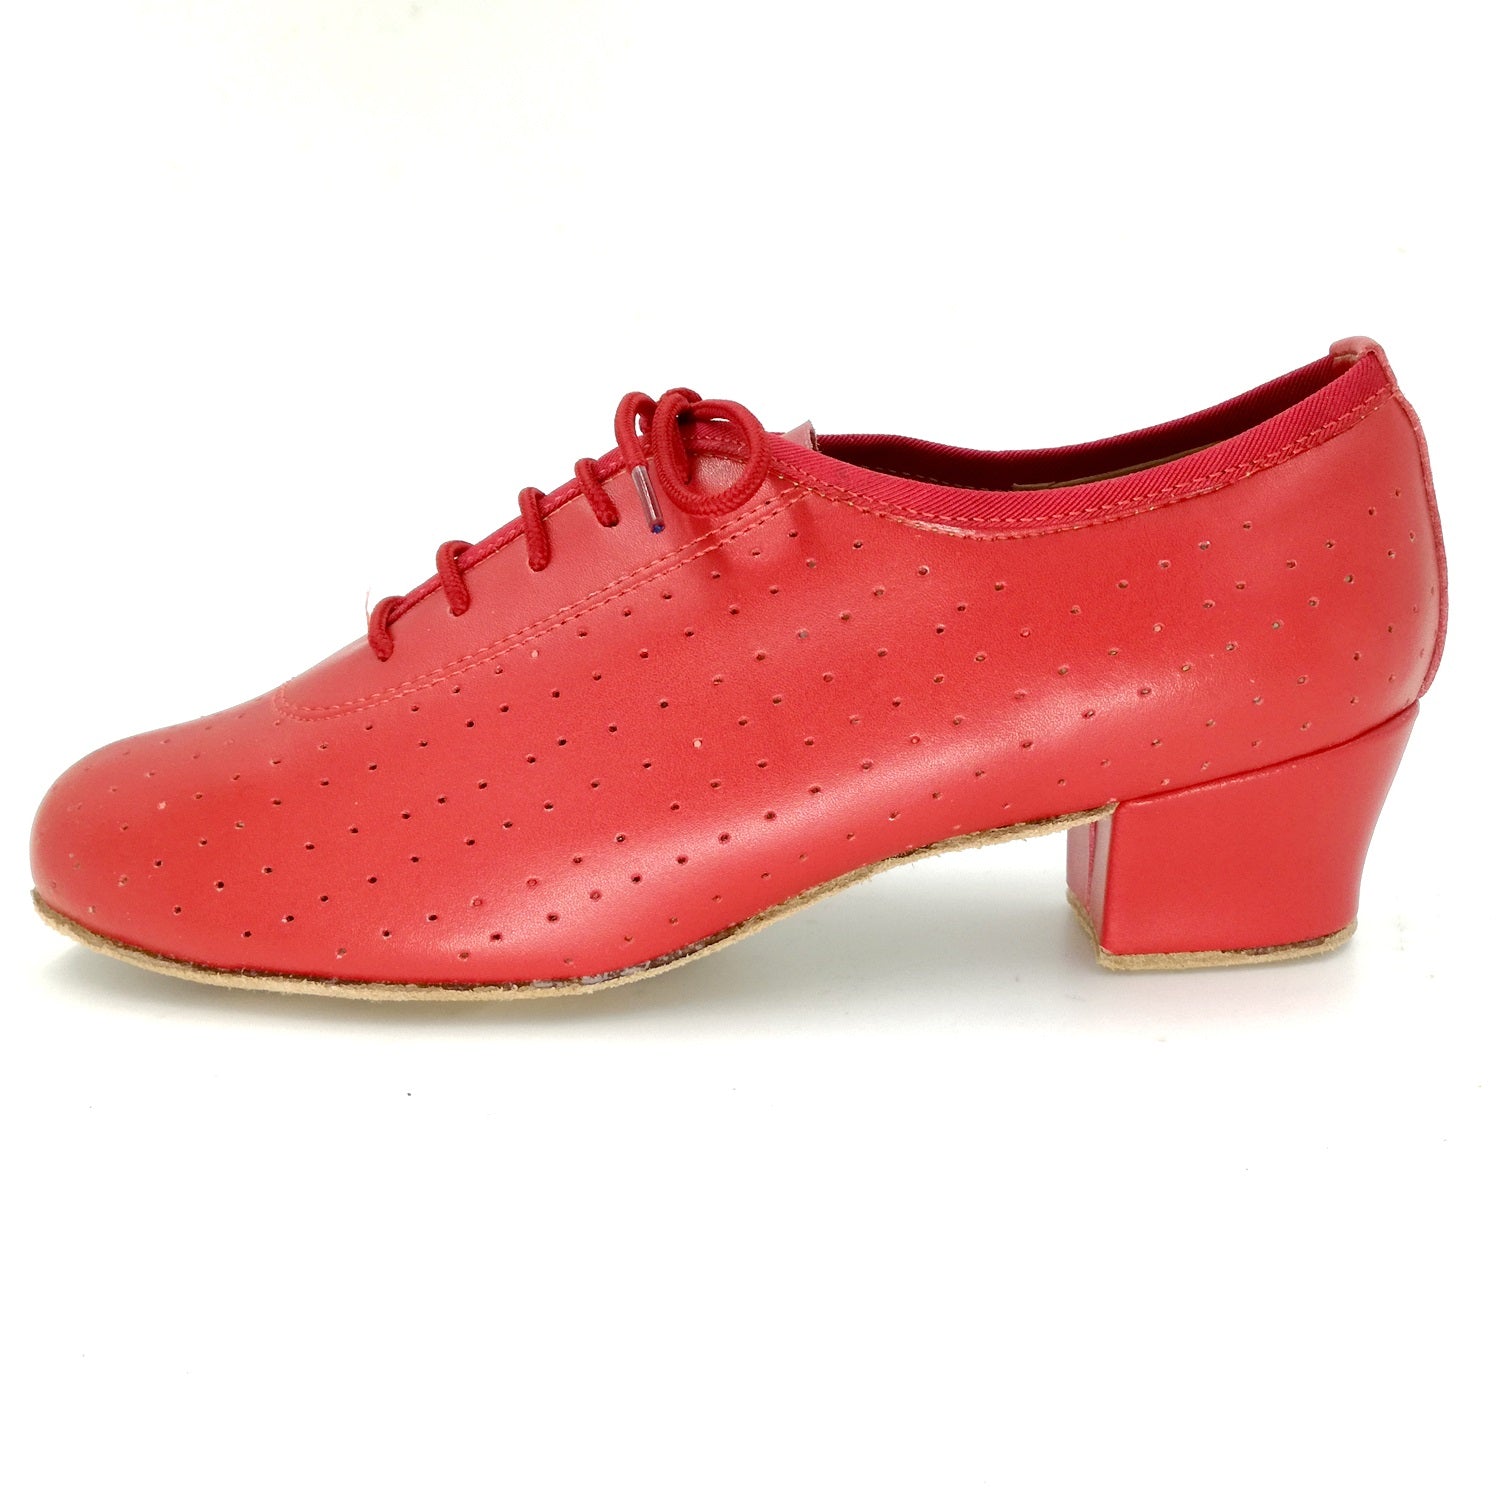 Women red suede sole ballroom dancing shoes for Latin, Tango1